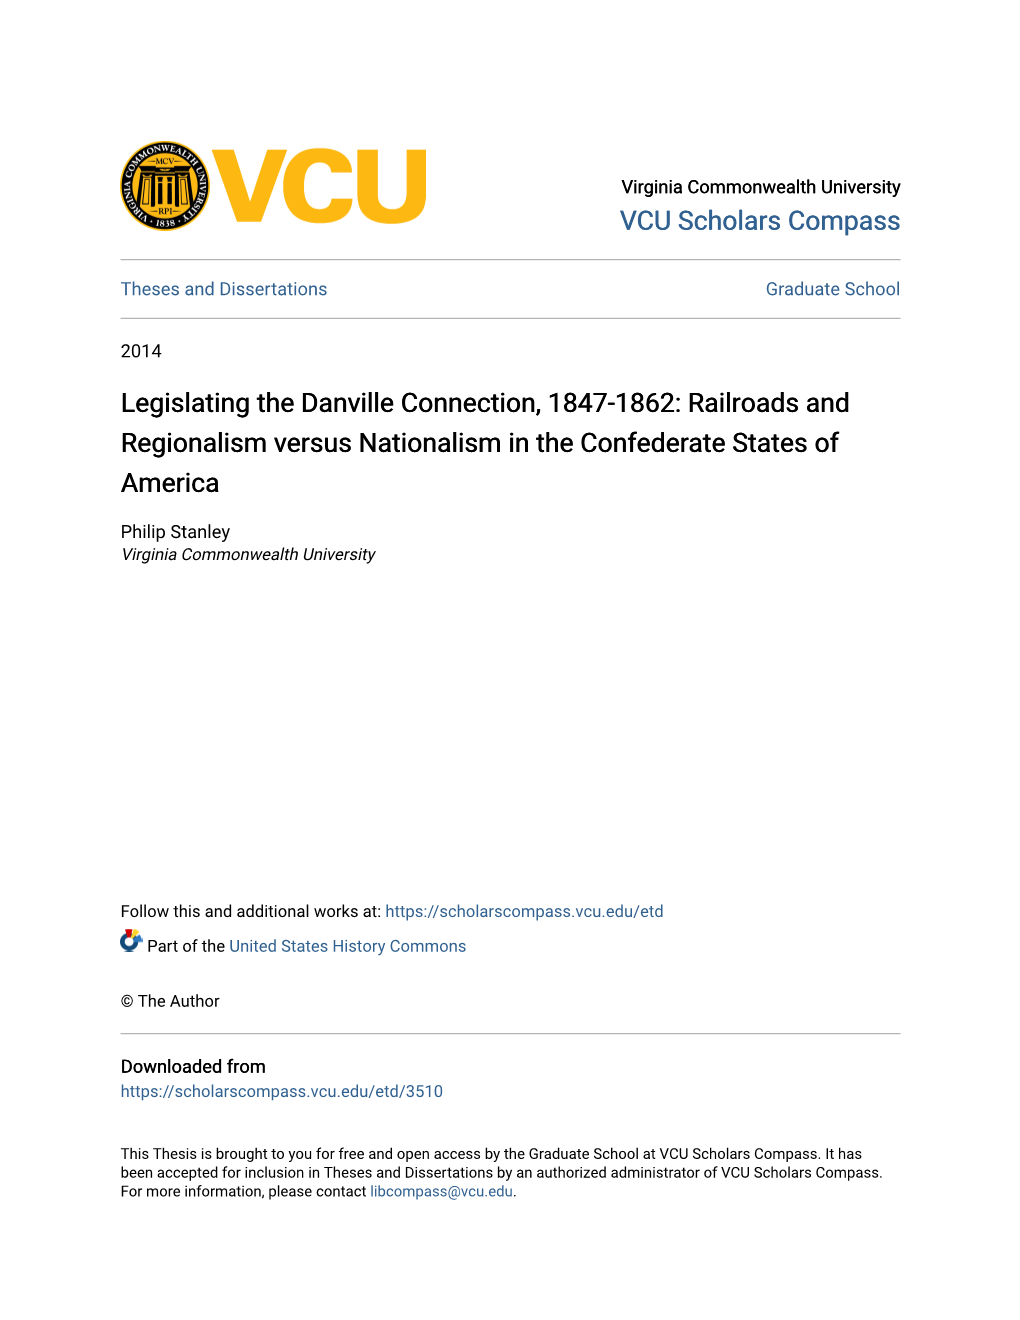 Legislating the Danville Connection, 1847-1862: Railroads and Regionalism Versus Nationalism in the Confederate States of America